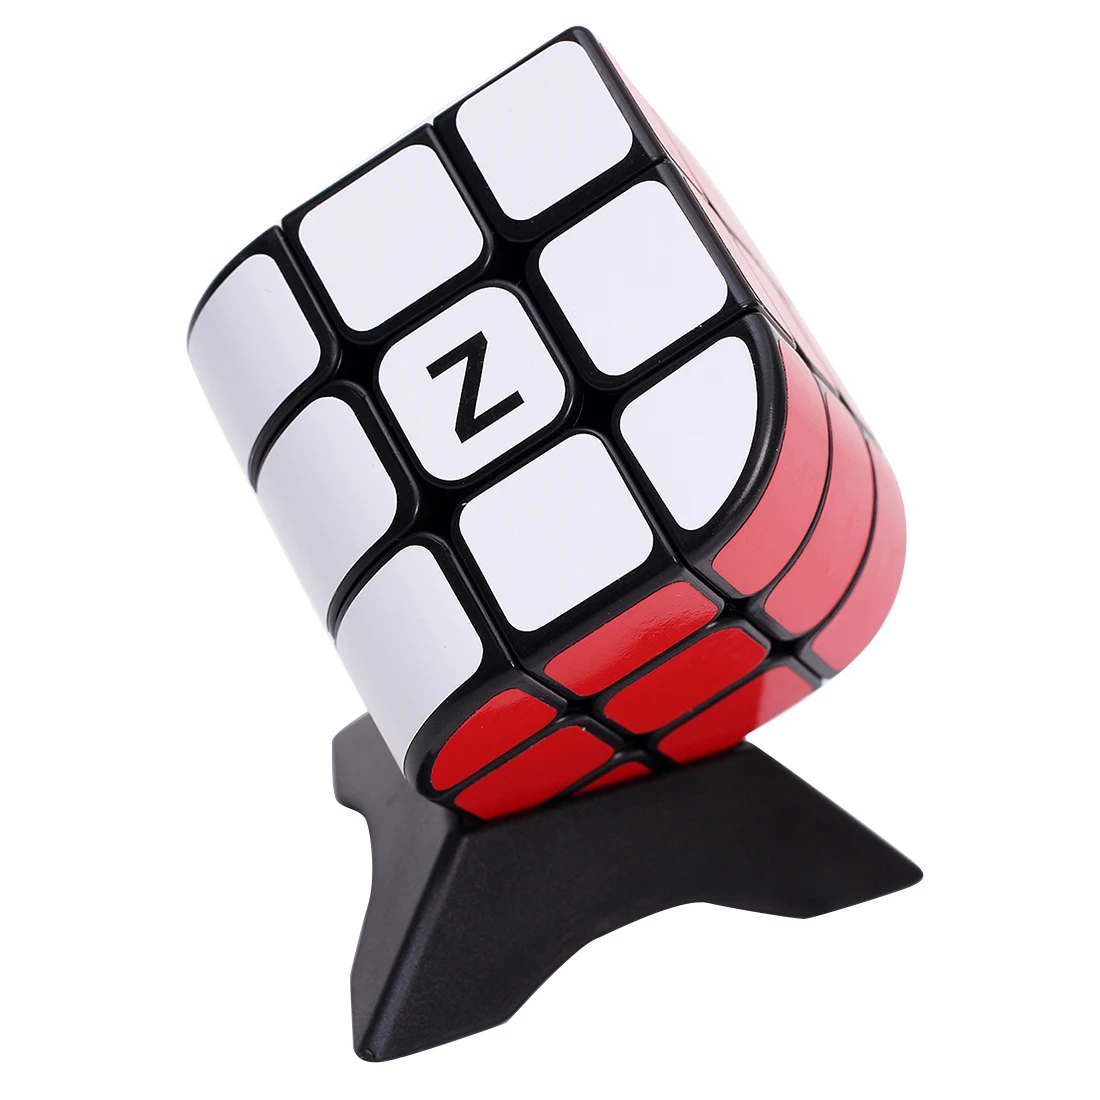 Z cube Penrose cube Trihedron волшебный куб пазл игрушки для соревнований - Цвет: black